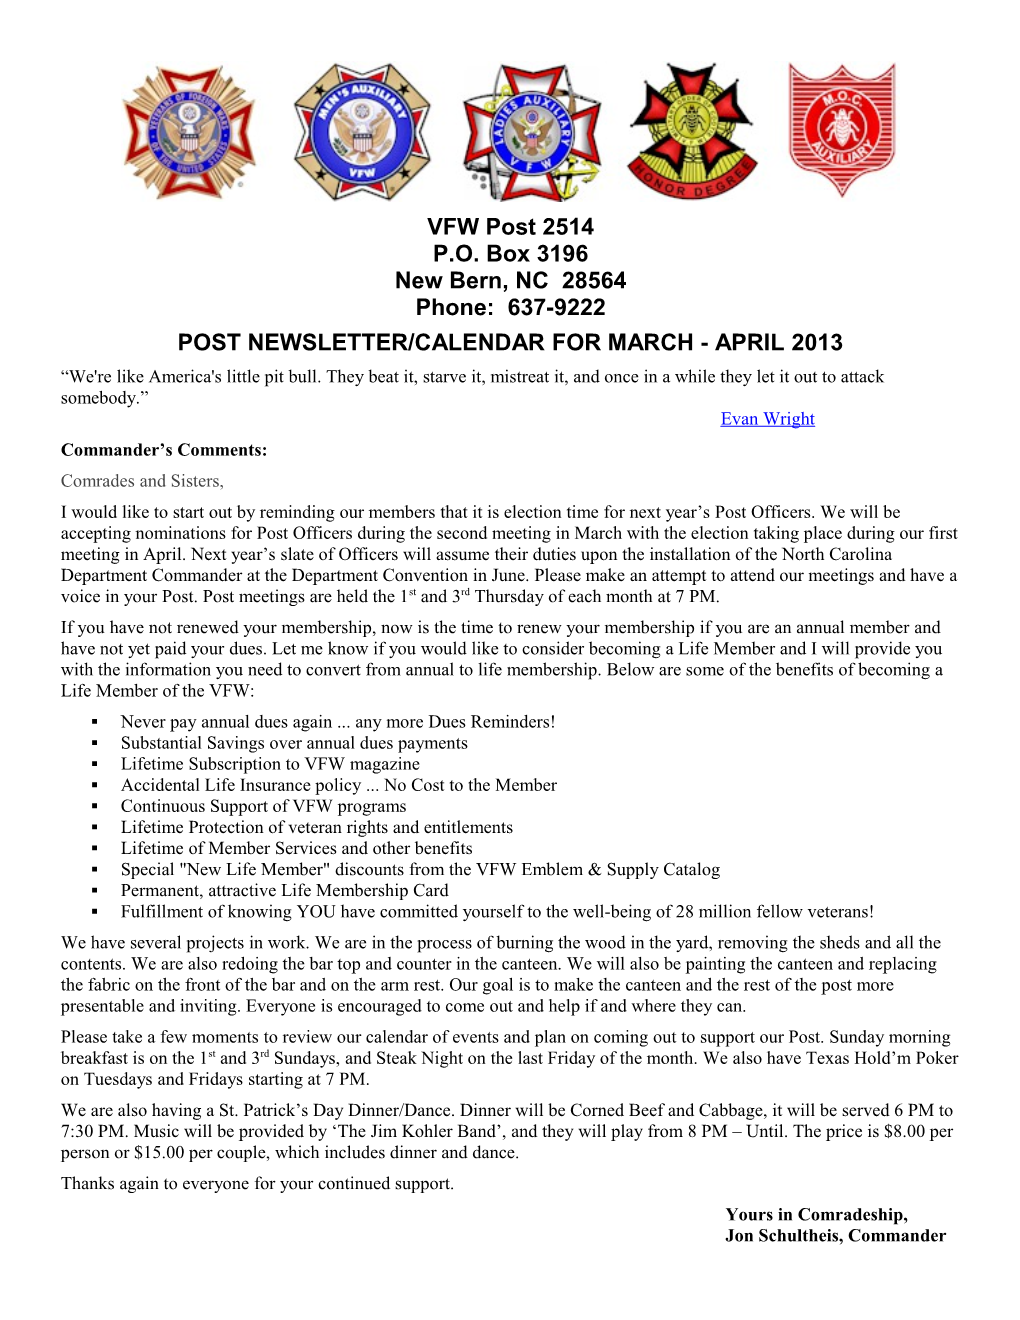 Post Newsletter/Calendar for March - April 2013